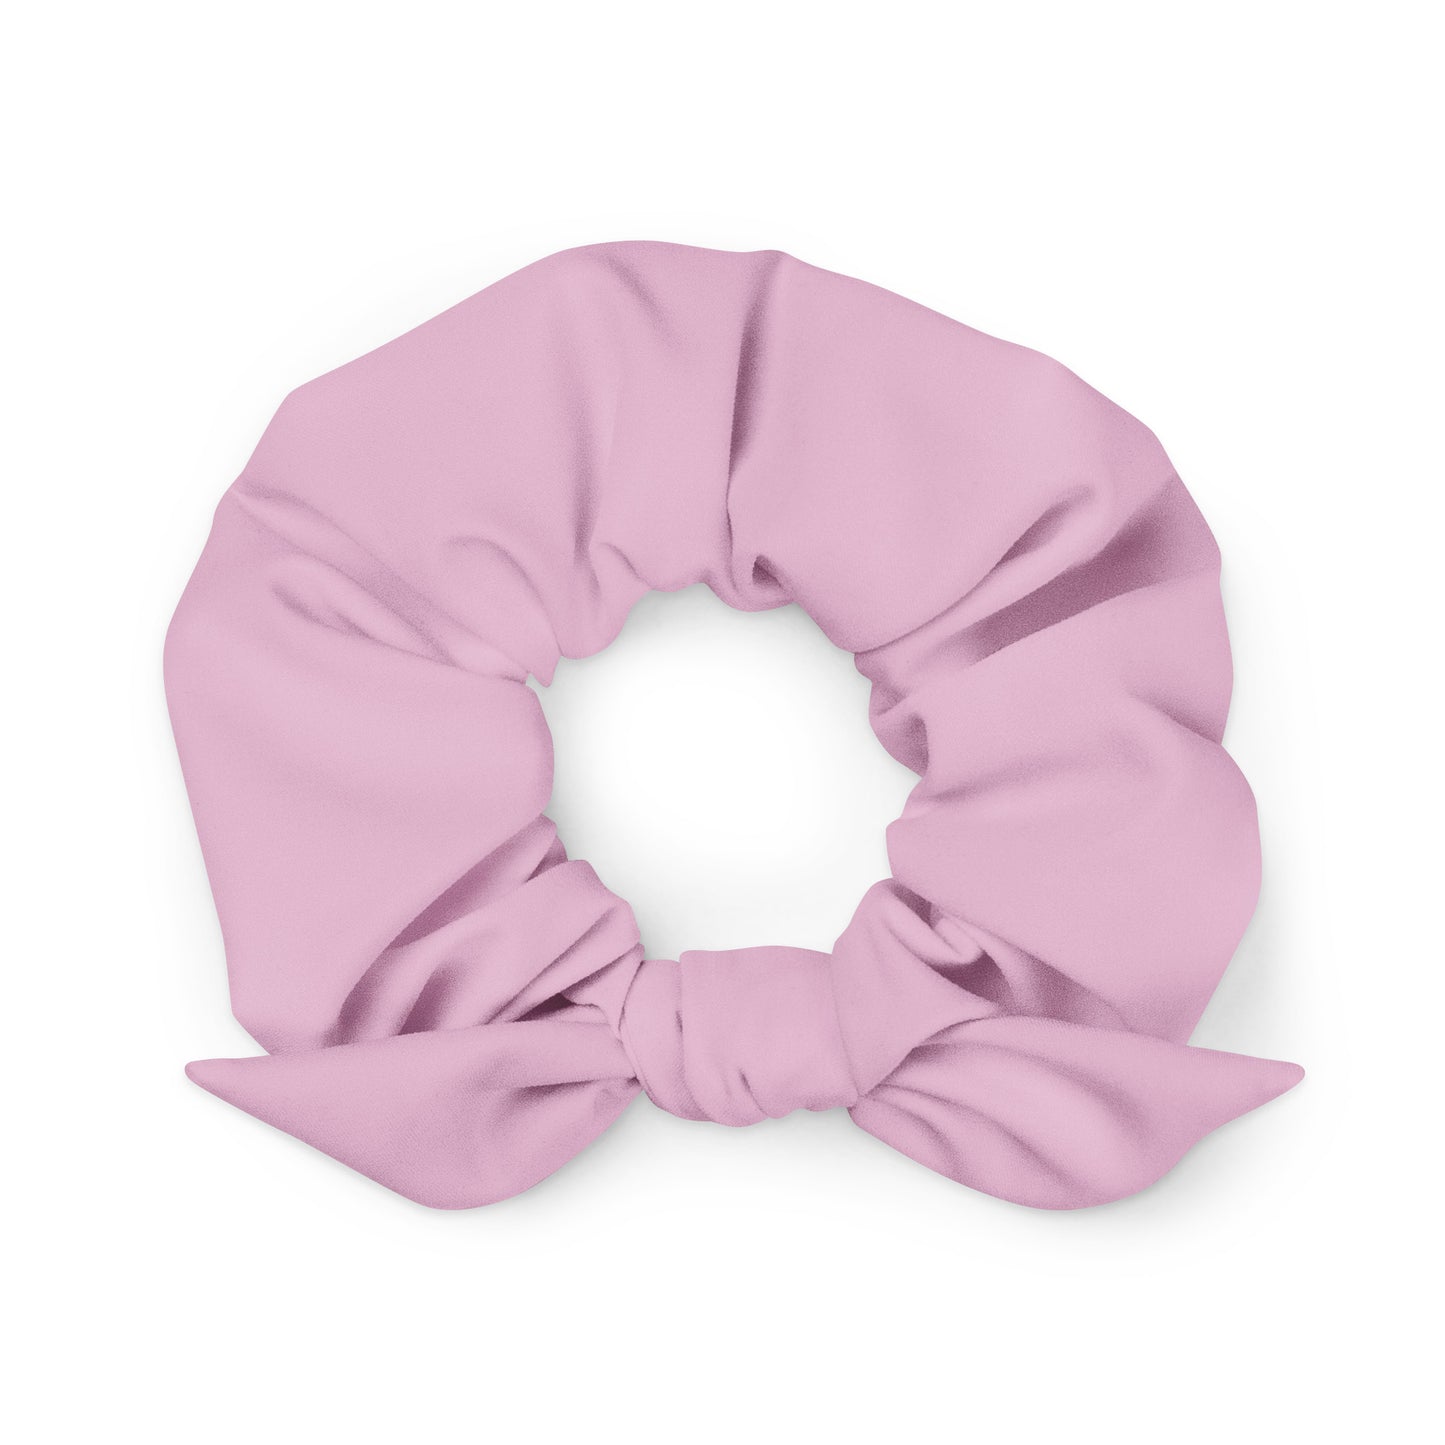 Hair Scrunchies For Women (Scrunchie Twilight Colour)